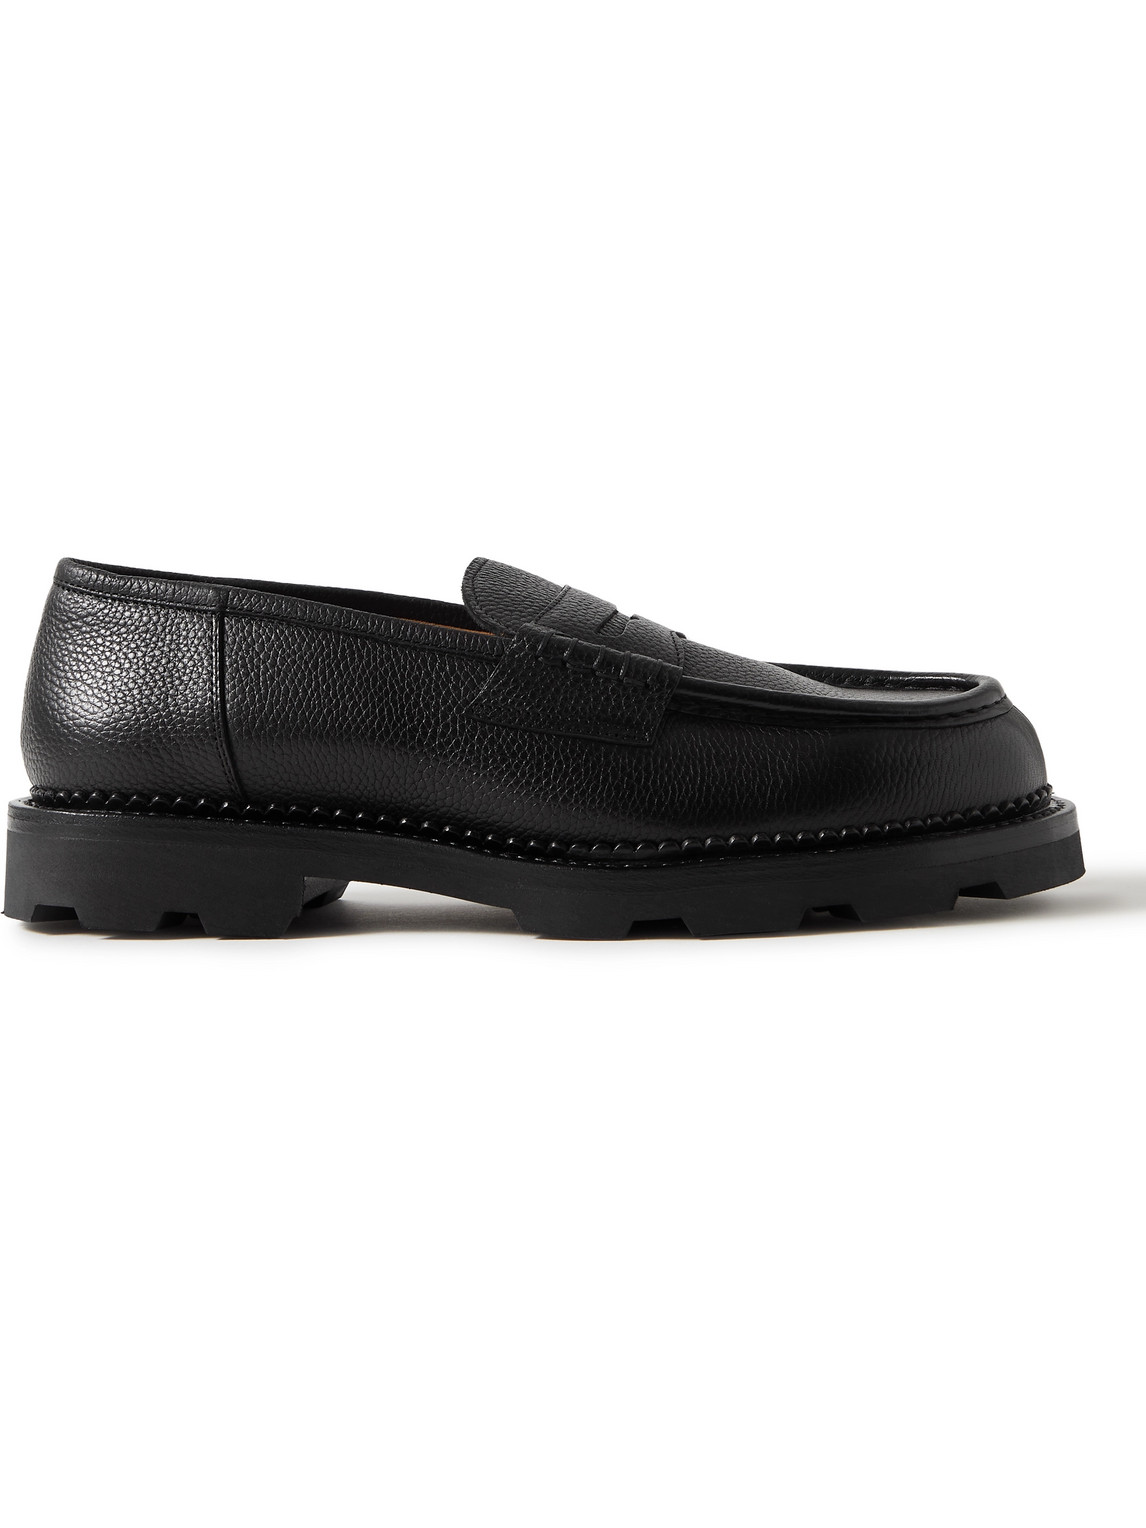 Yuketen Frentaly Pebble-grain Leather Penny Loafers In Black